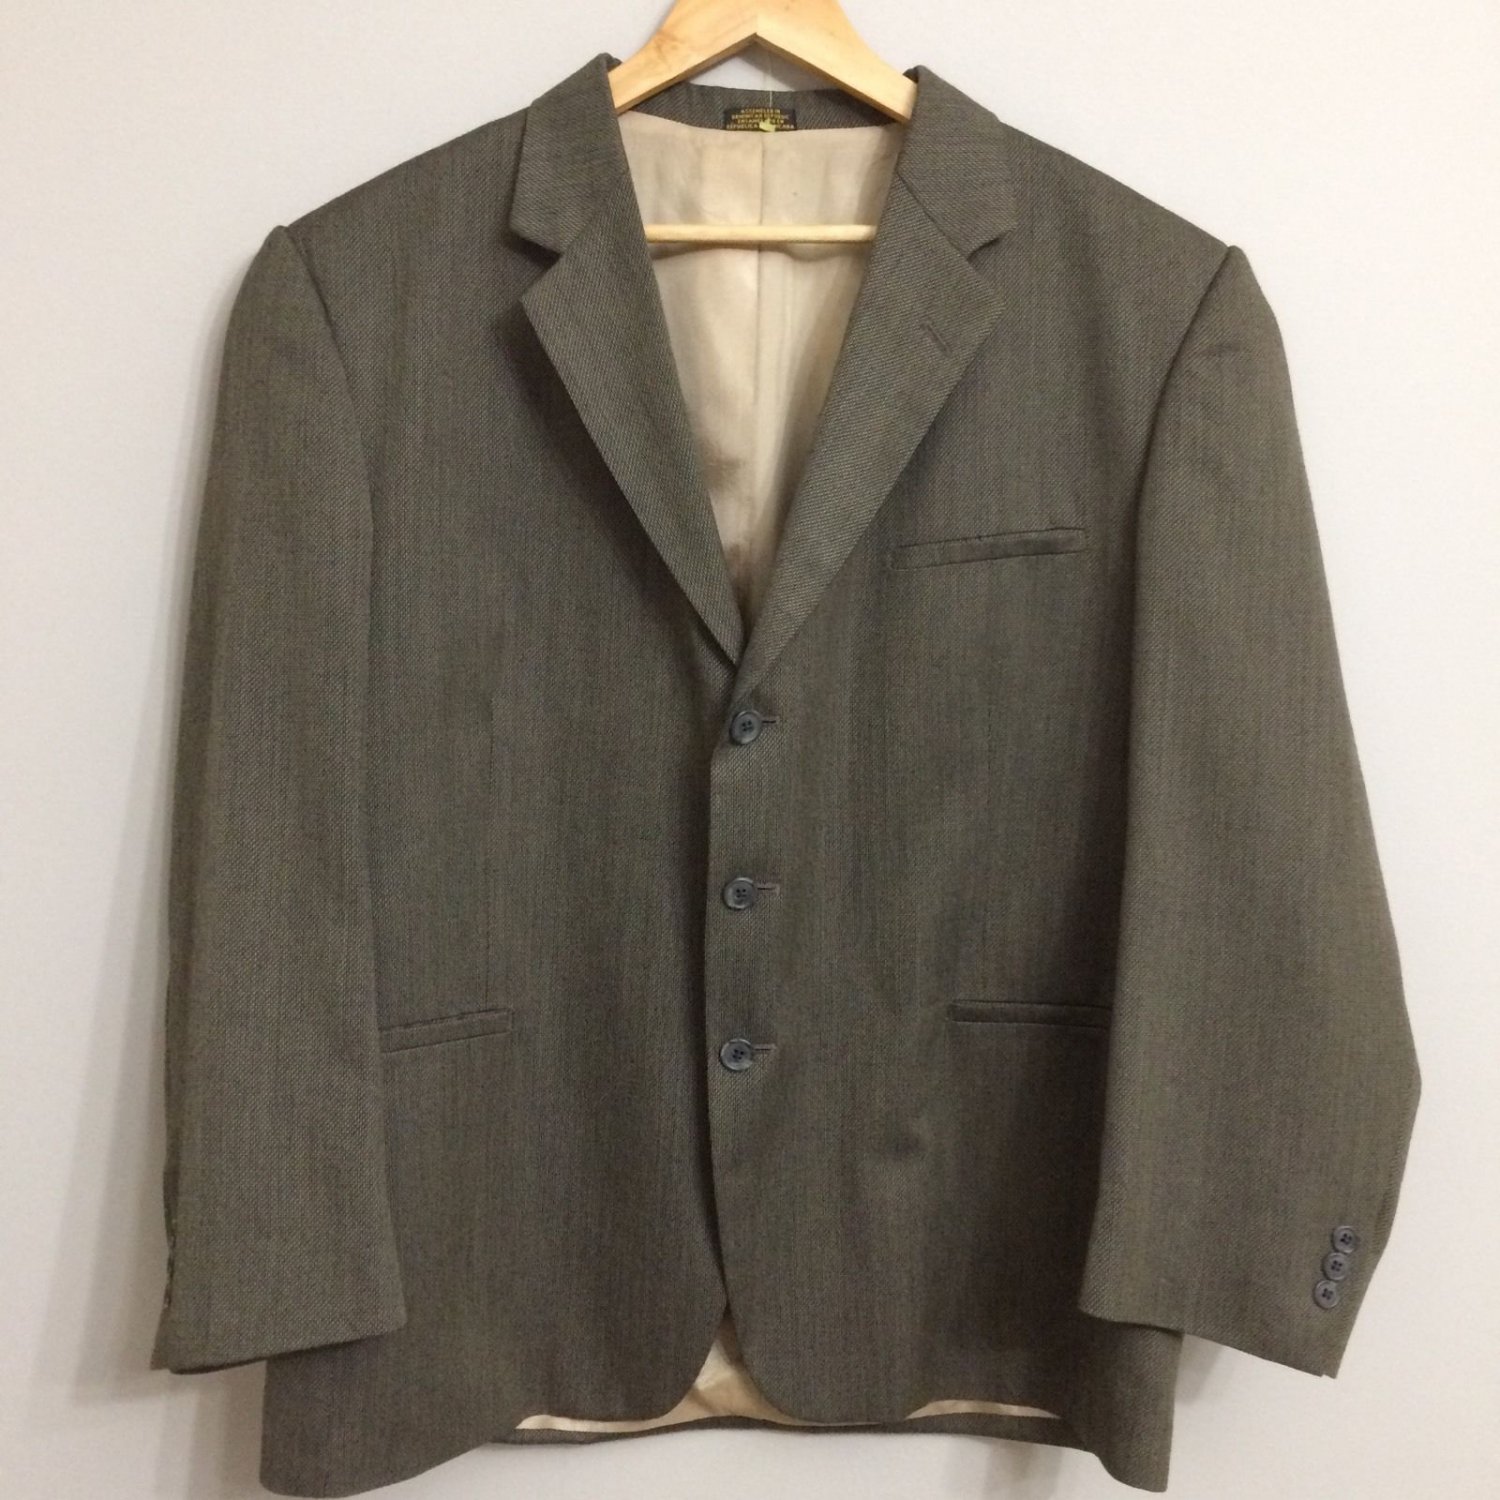 USED J Ferrar 44S Brown Wool Blend Three Button Sport Coat Blazer